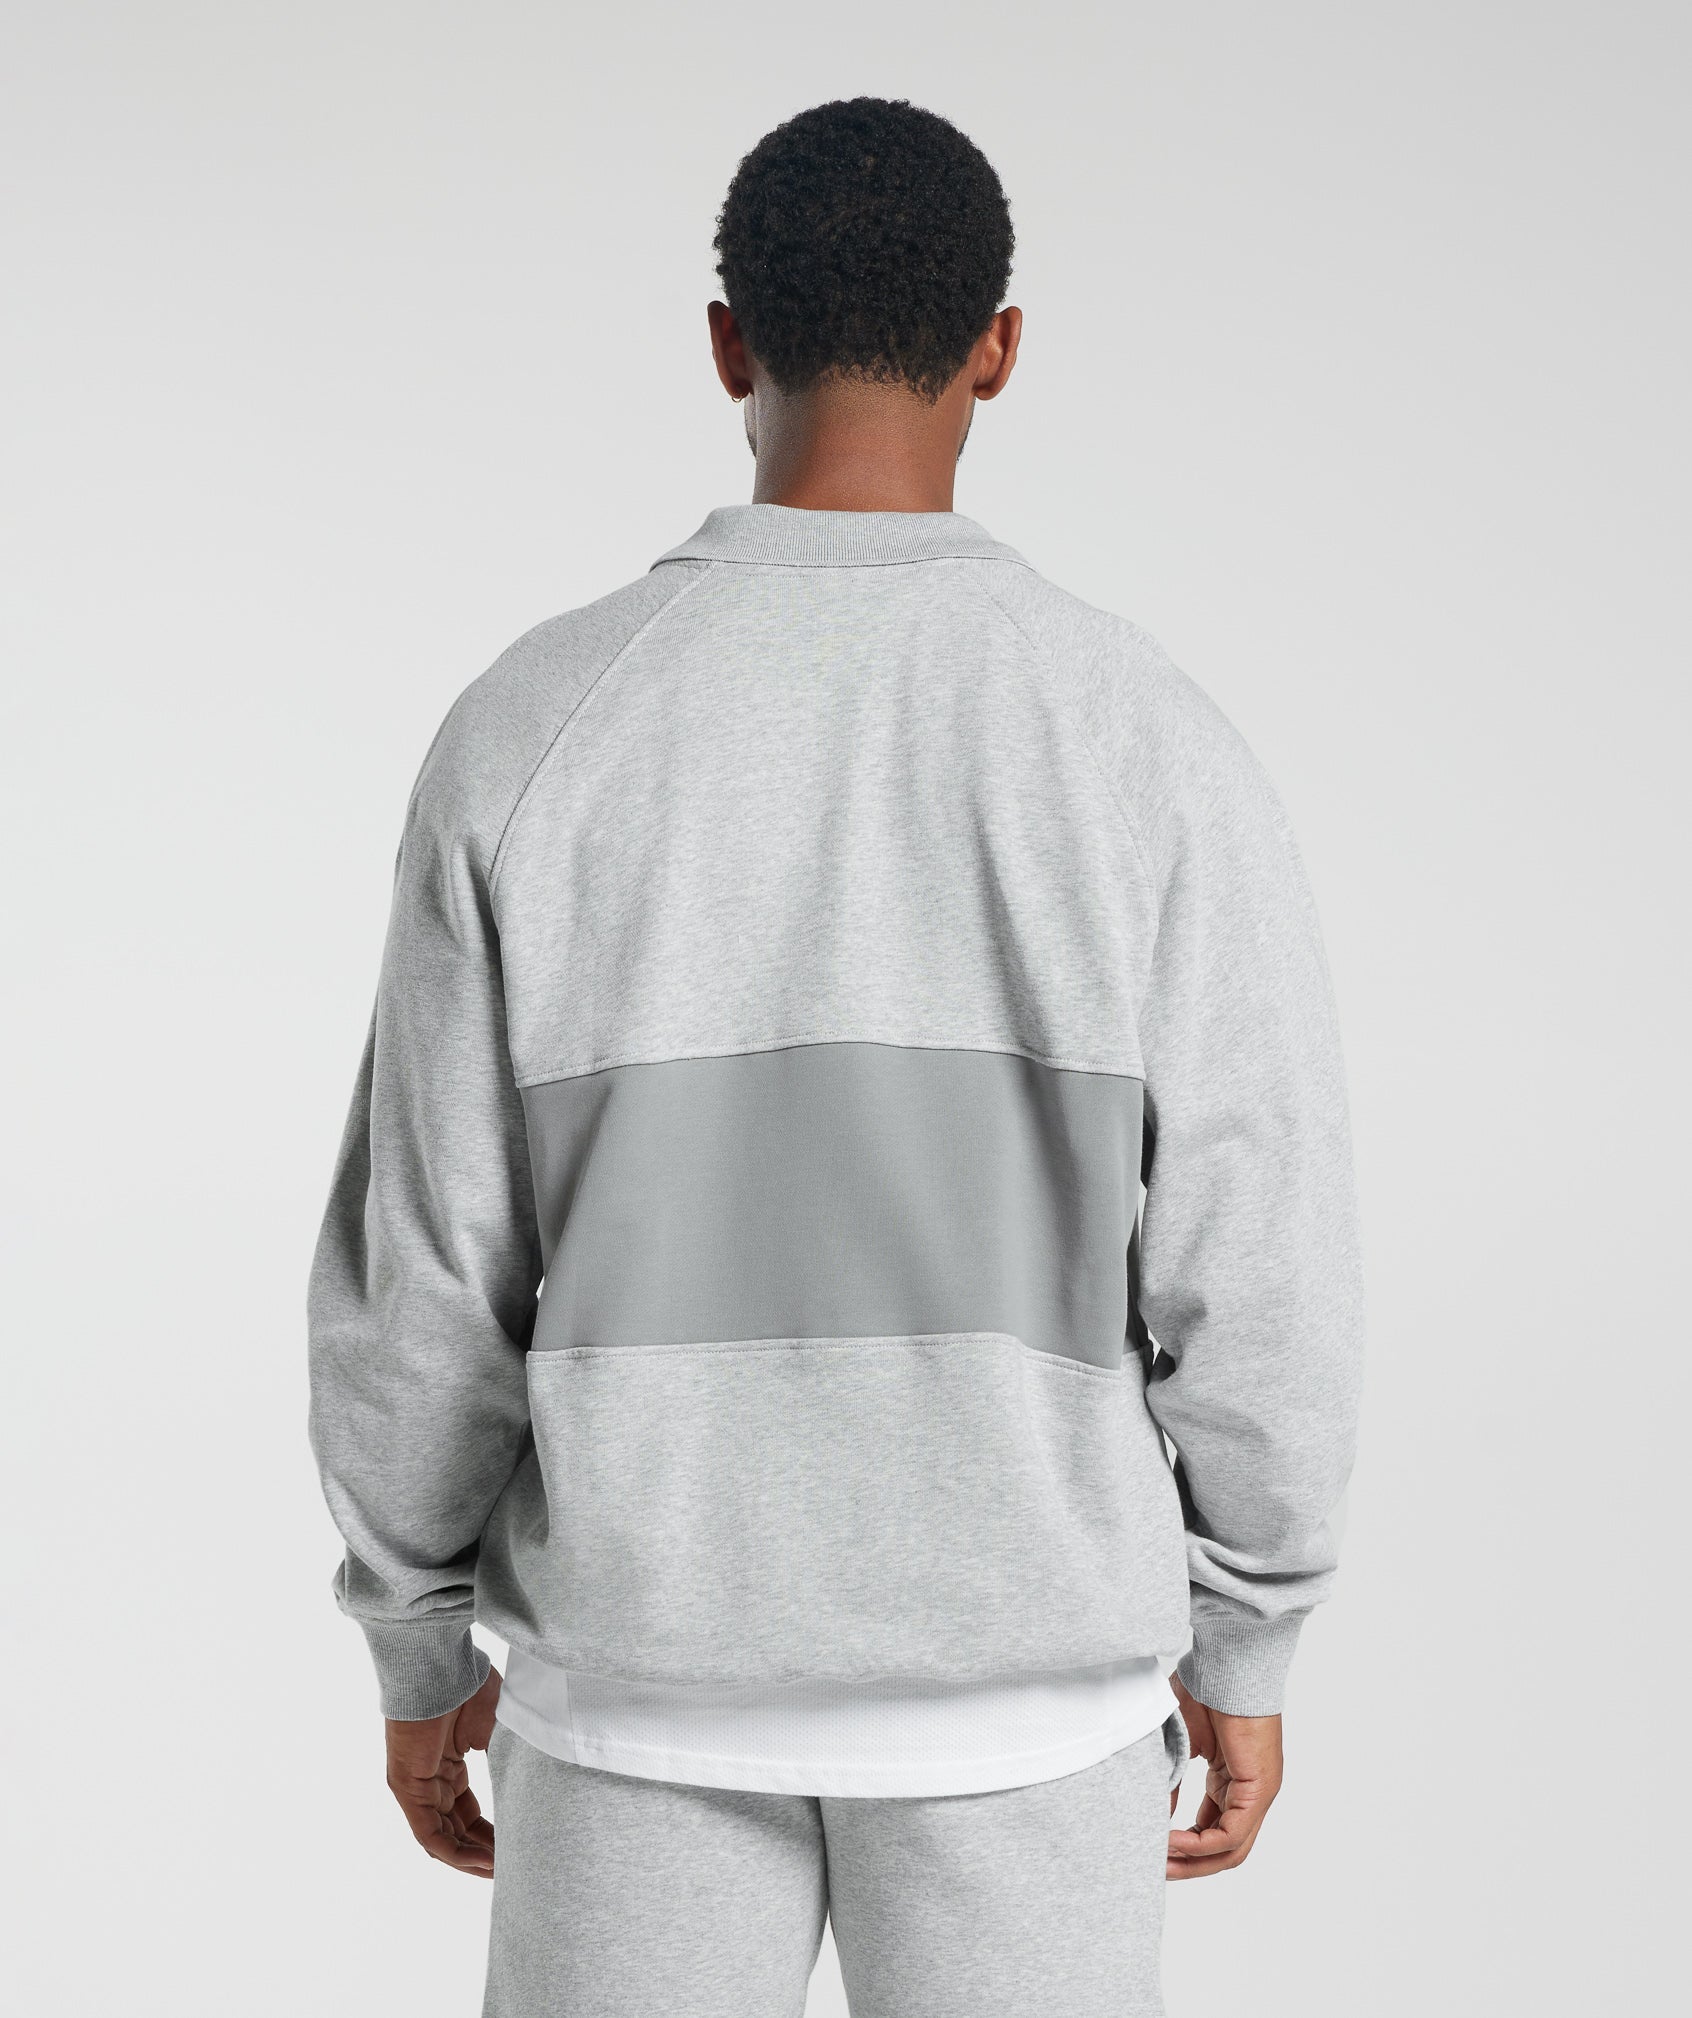 Rest Day Essentials Sweatshirt Polo in Light Grey Core Marl/Smokey Grey - view 2